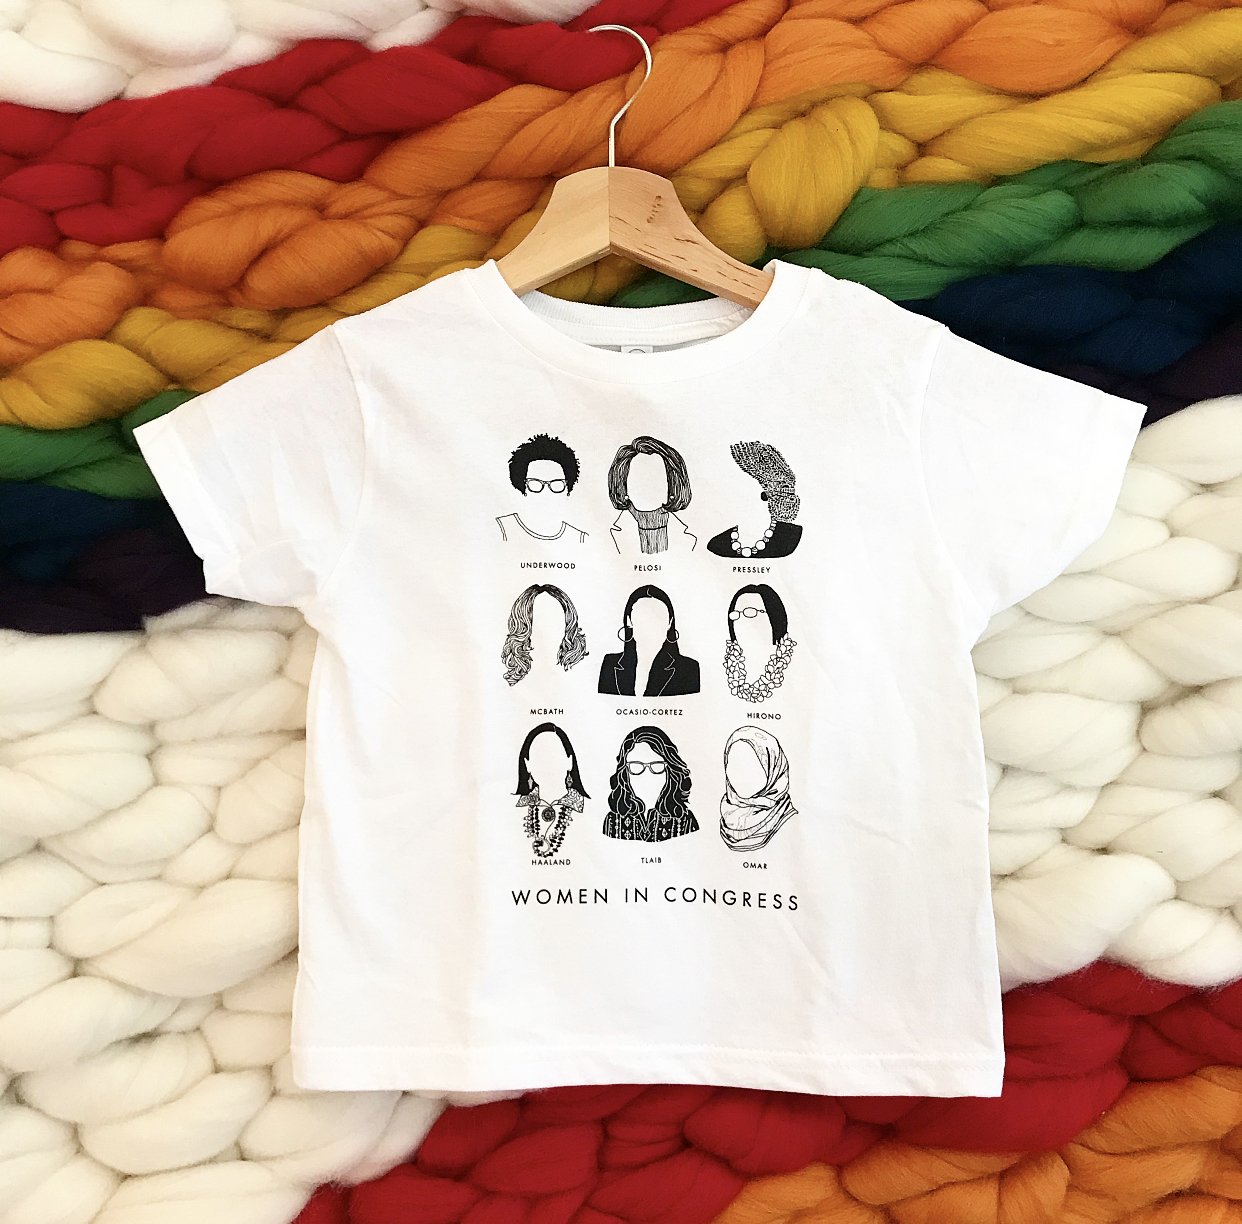 Otherwild "Women in Congress" printed white t-shirt